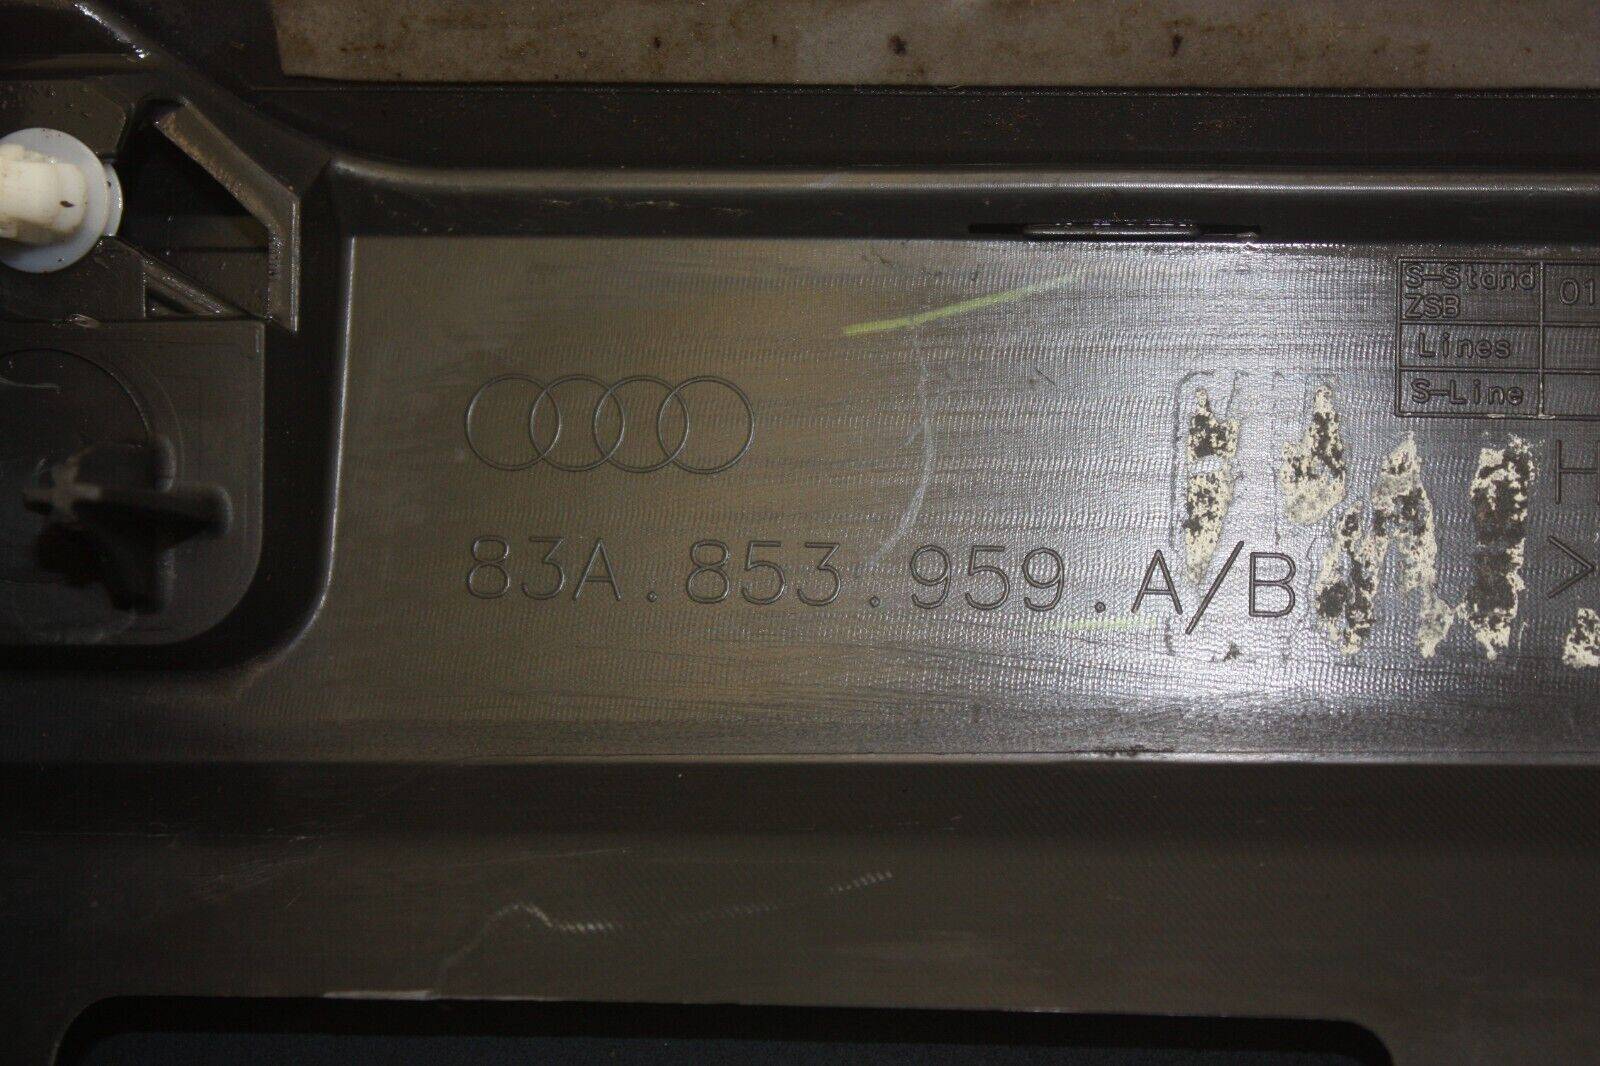 Audi-Q3-S-Line-Front-Left-Door-Moulding-2018-ON-83A853959A-Genuine-176283434695-7